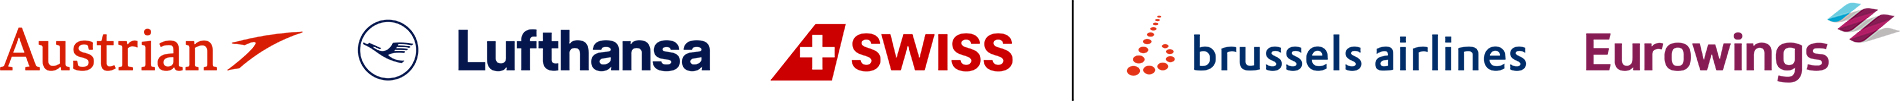 Logos: Austrian, Lufthansa, SWISS, brussels airlines, Eurowings